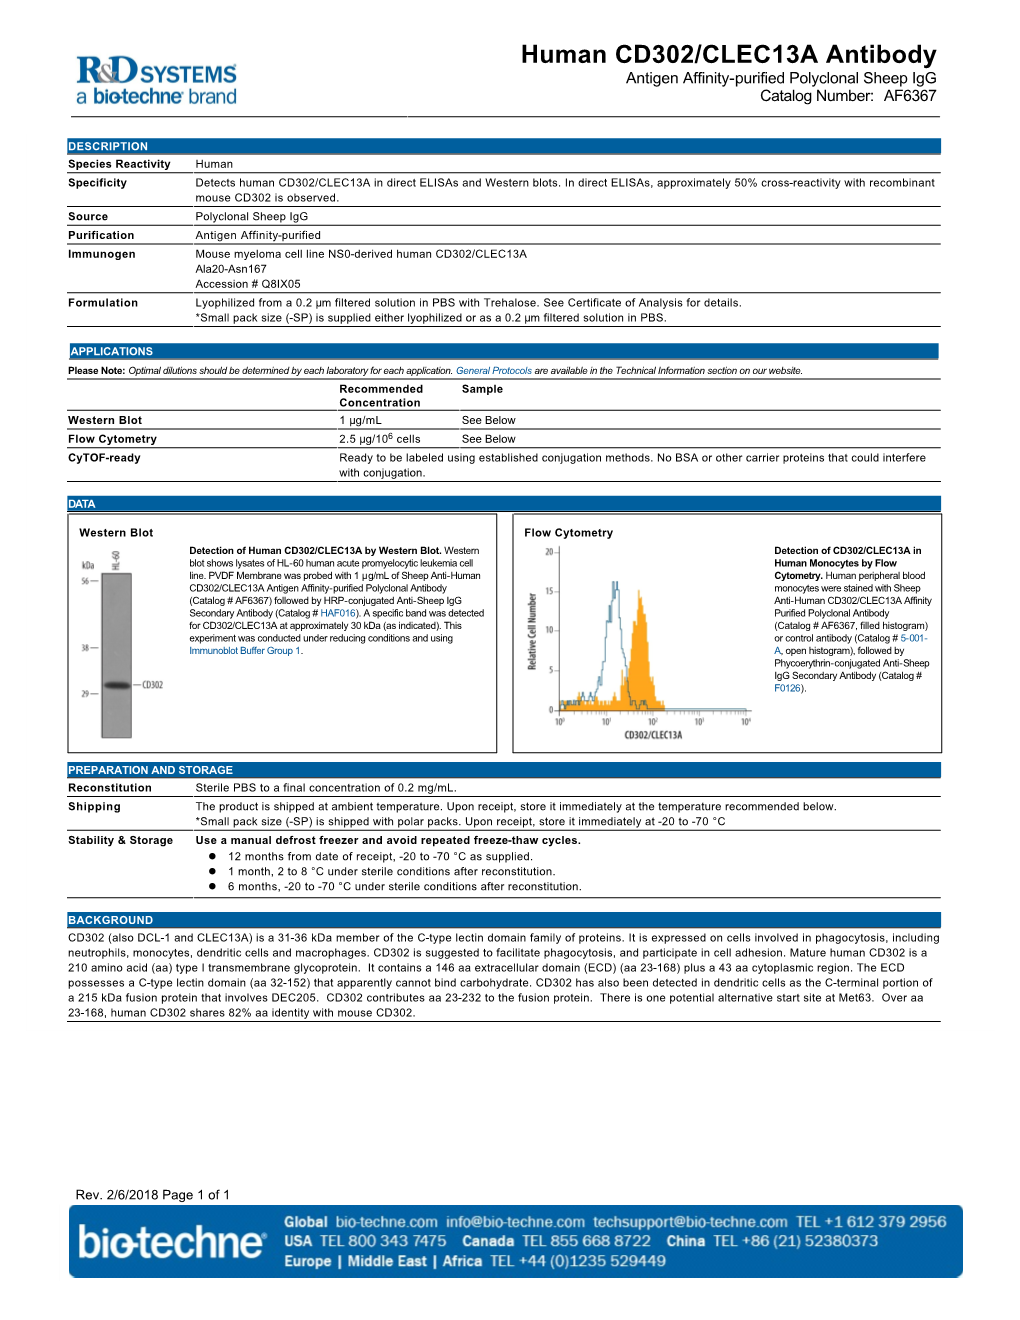 Human CD302/CLEC13A Antibody Antigen Affinity-Purified Polyclonal Sheep Igg Catalog Number: AF6367